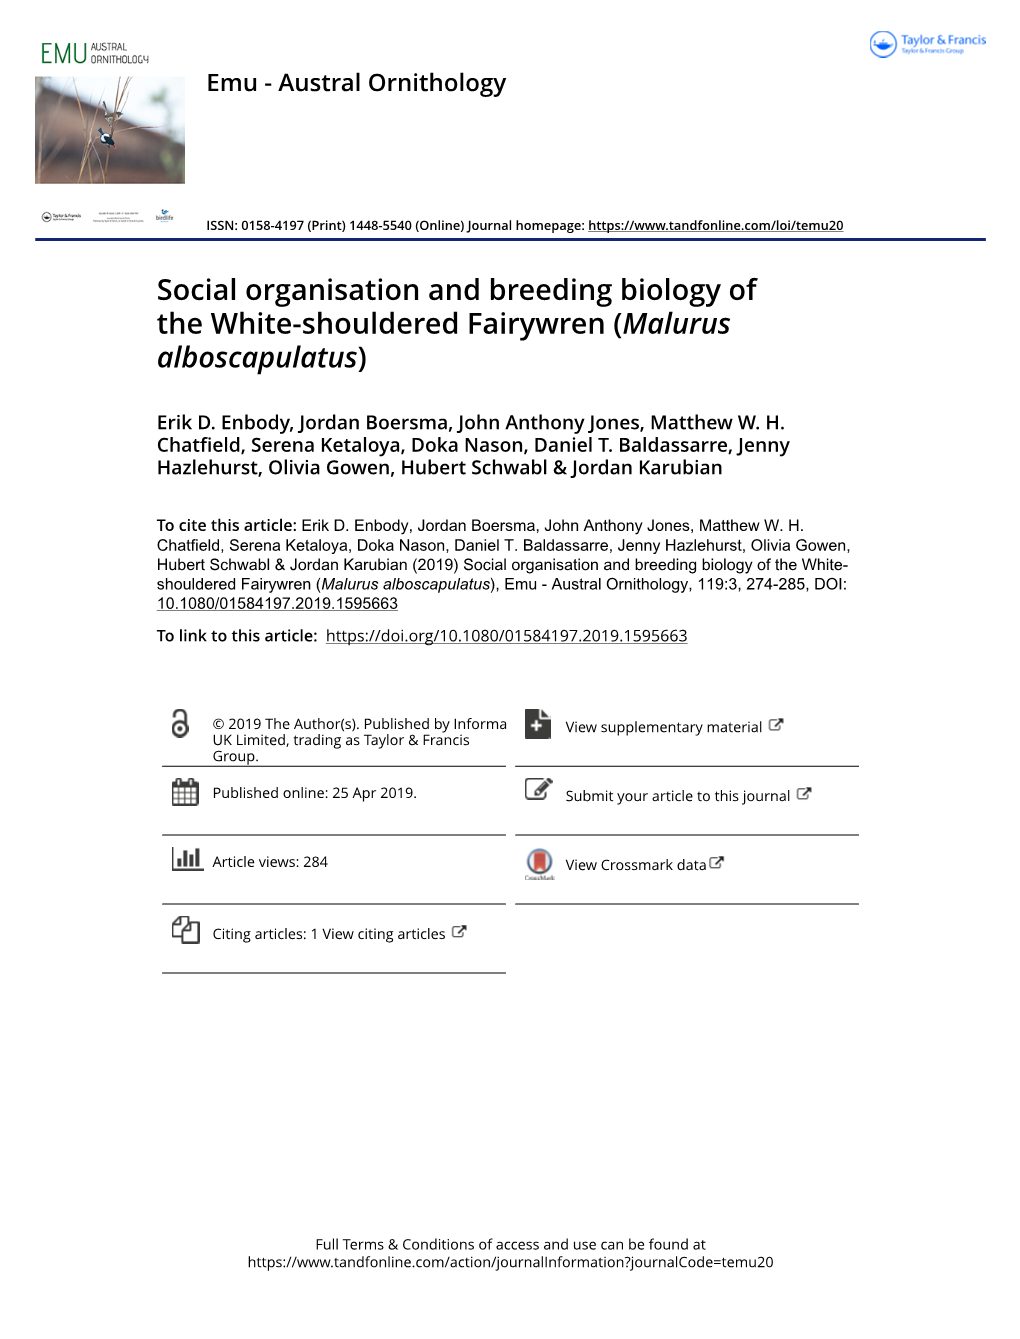 Social Organisation and Breeding Biology of the White-Shouldered Fairywren (Malurus Alboscapulatus)